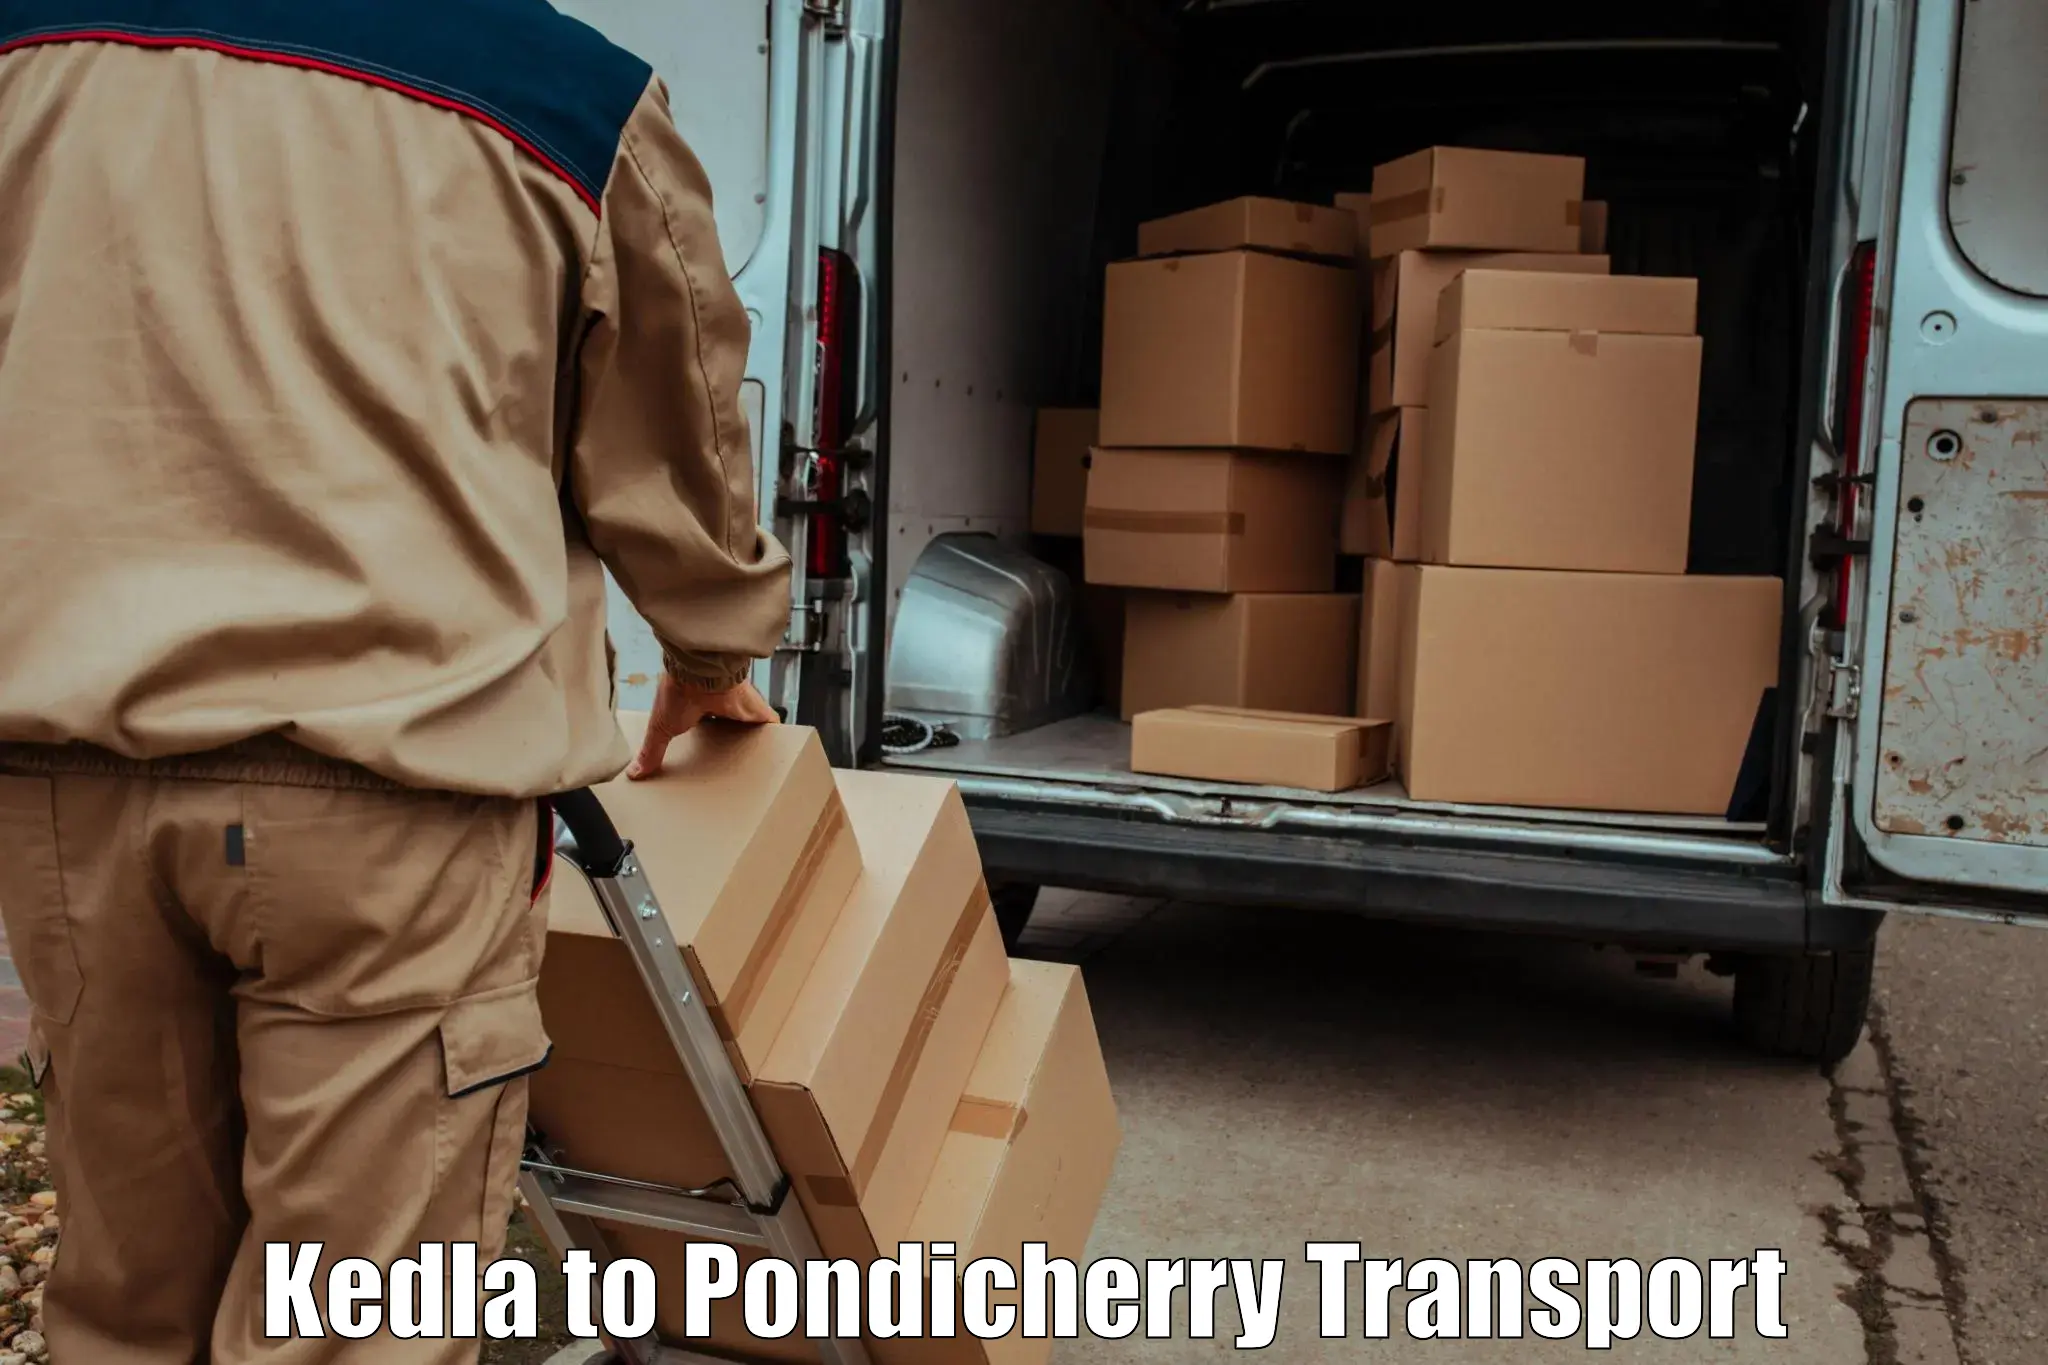 Goods delivery service Kedla to Pondicherry